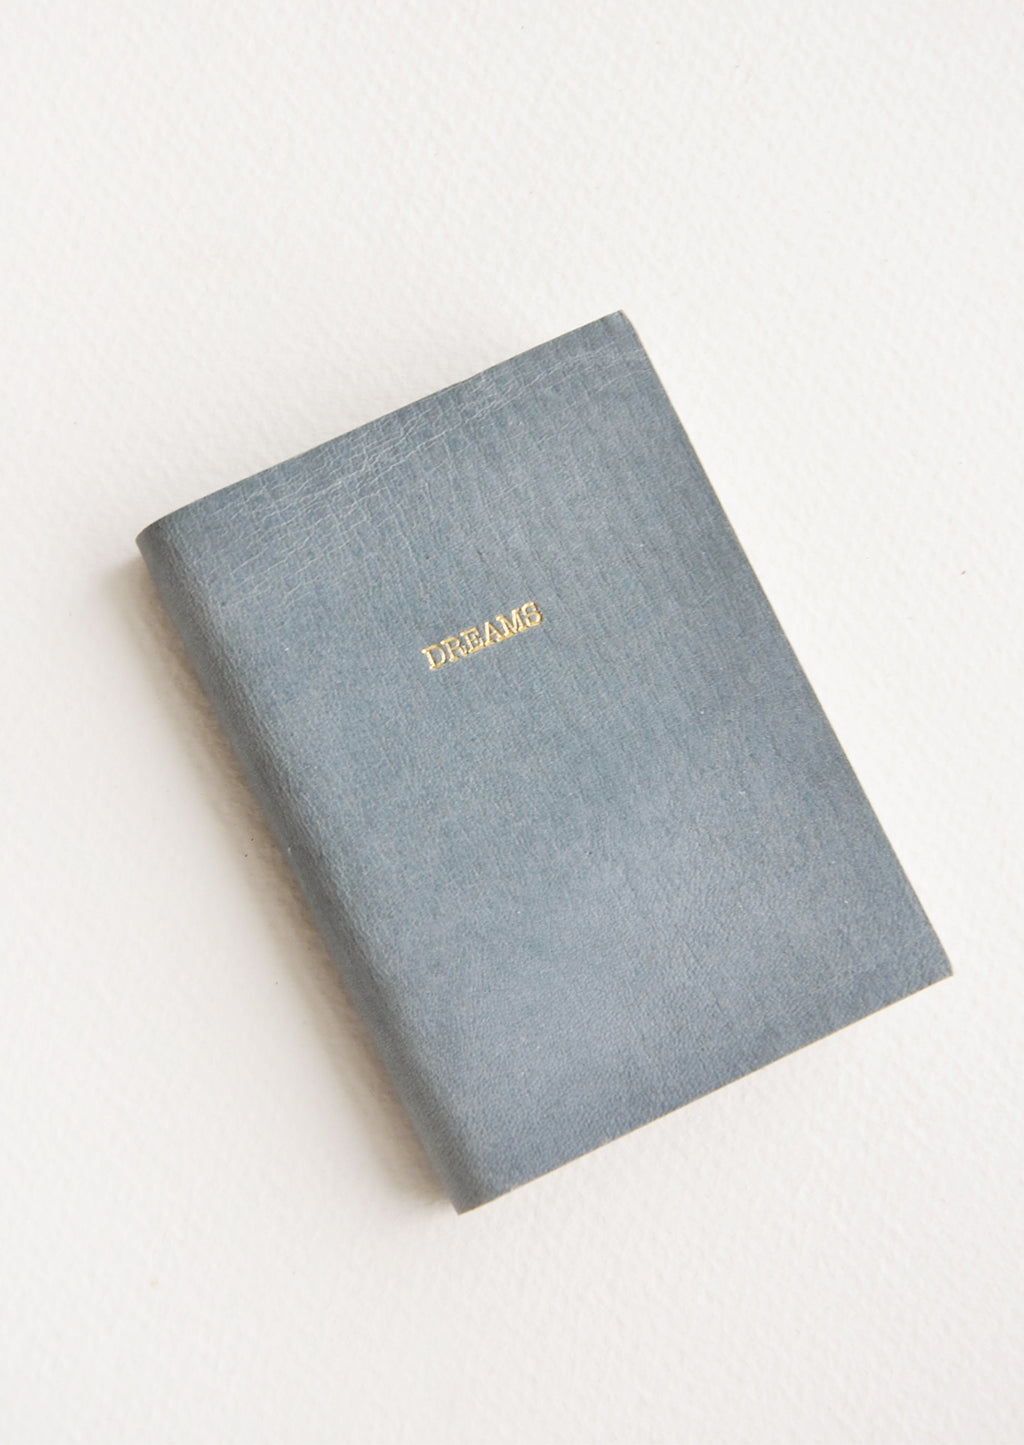 Dreams / Dusty Blue: Mini blue notebook featuring text "Dreams".